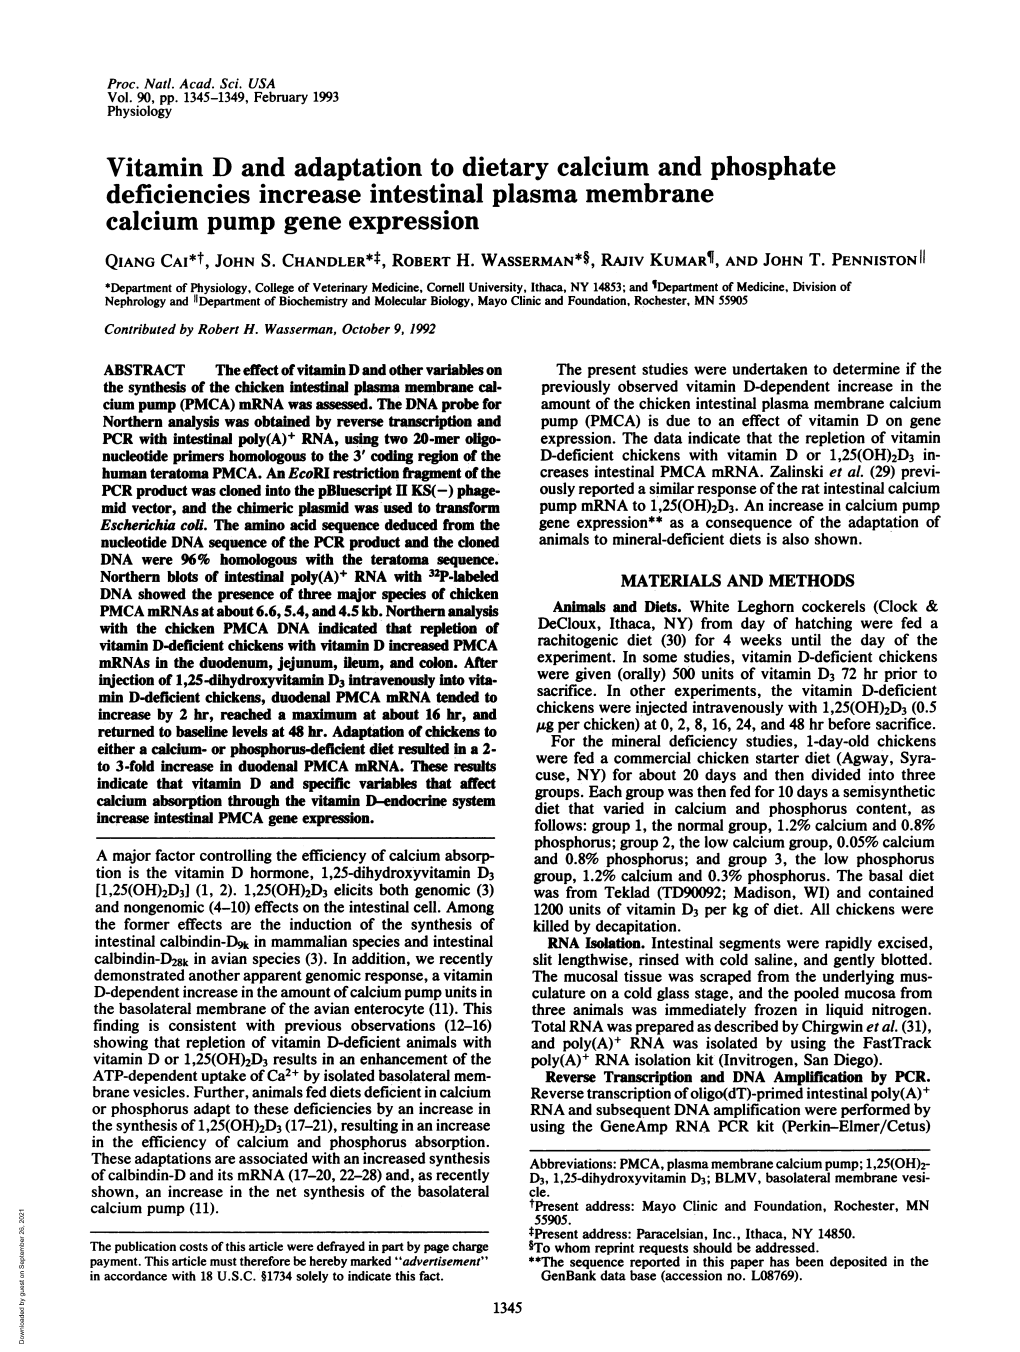 Vitamin D and Adaptation to Dietary Calcium and Phosphate Deficiencies Increase Intestinal Plasma Membrane Calcium Pump Gene Expression QIANG CAI*T, JOHN S